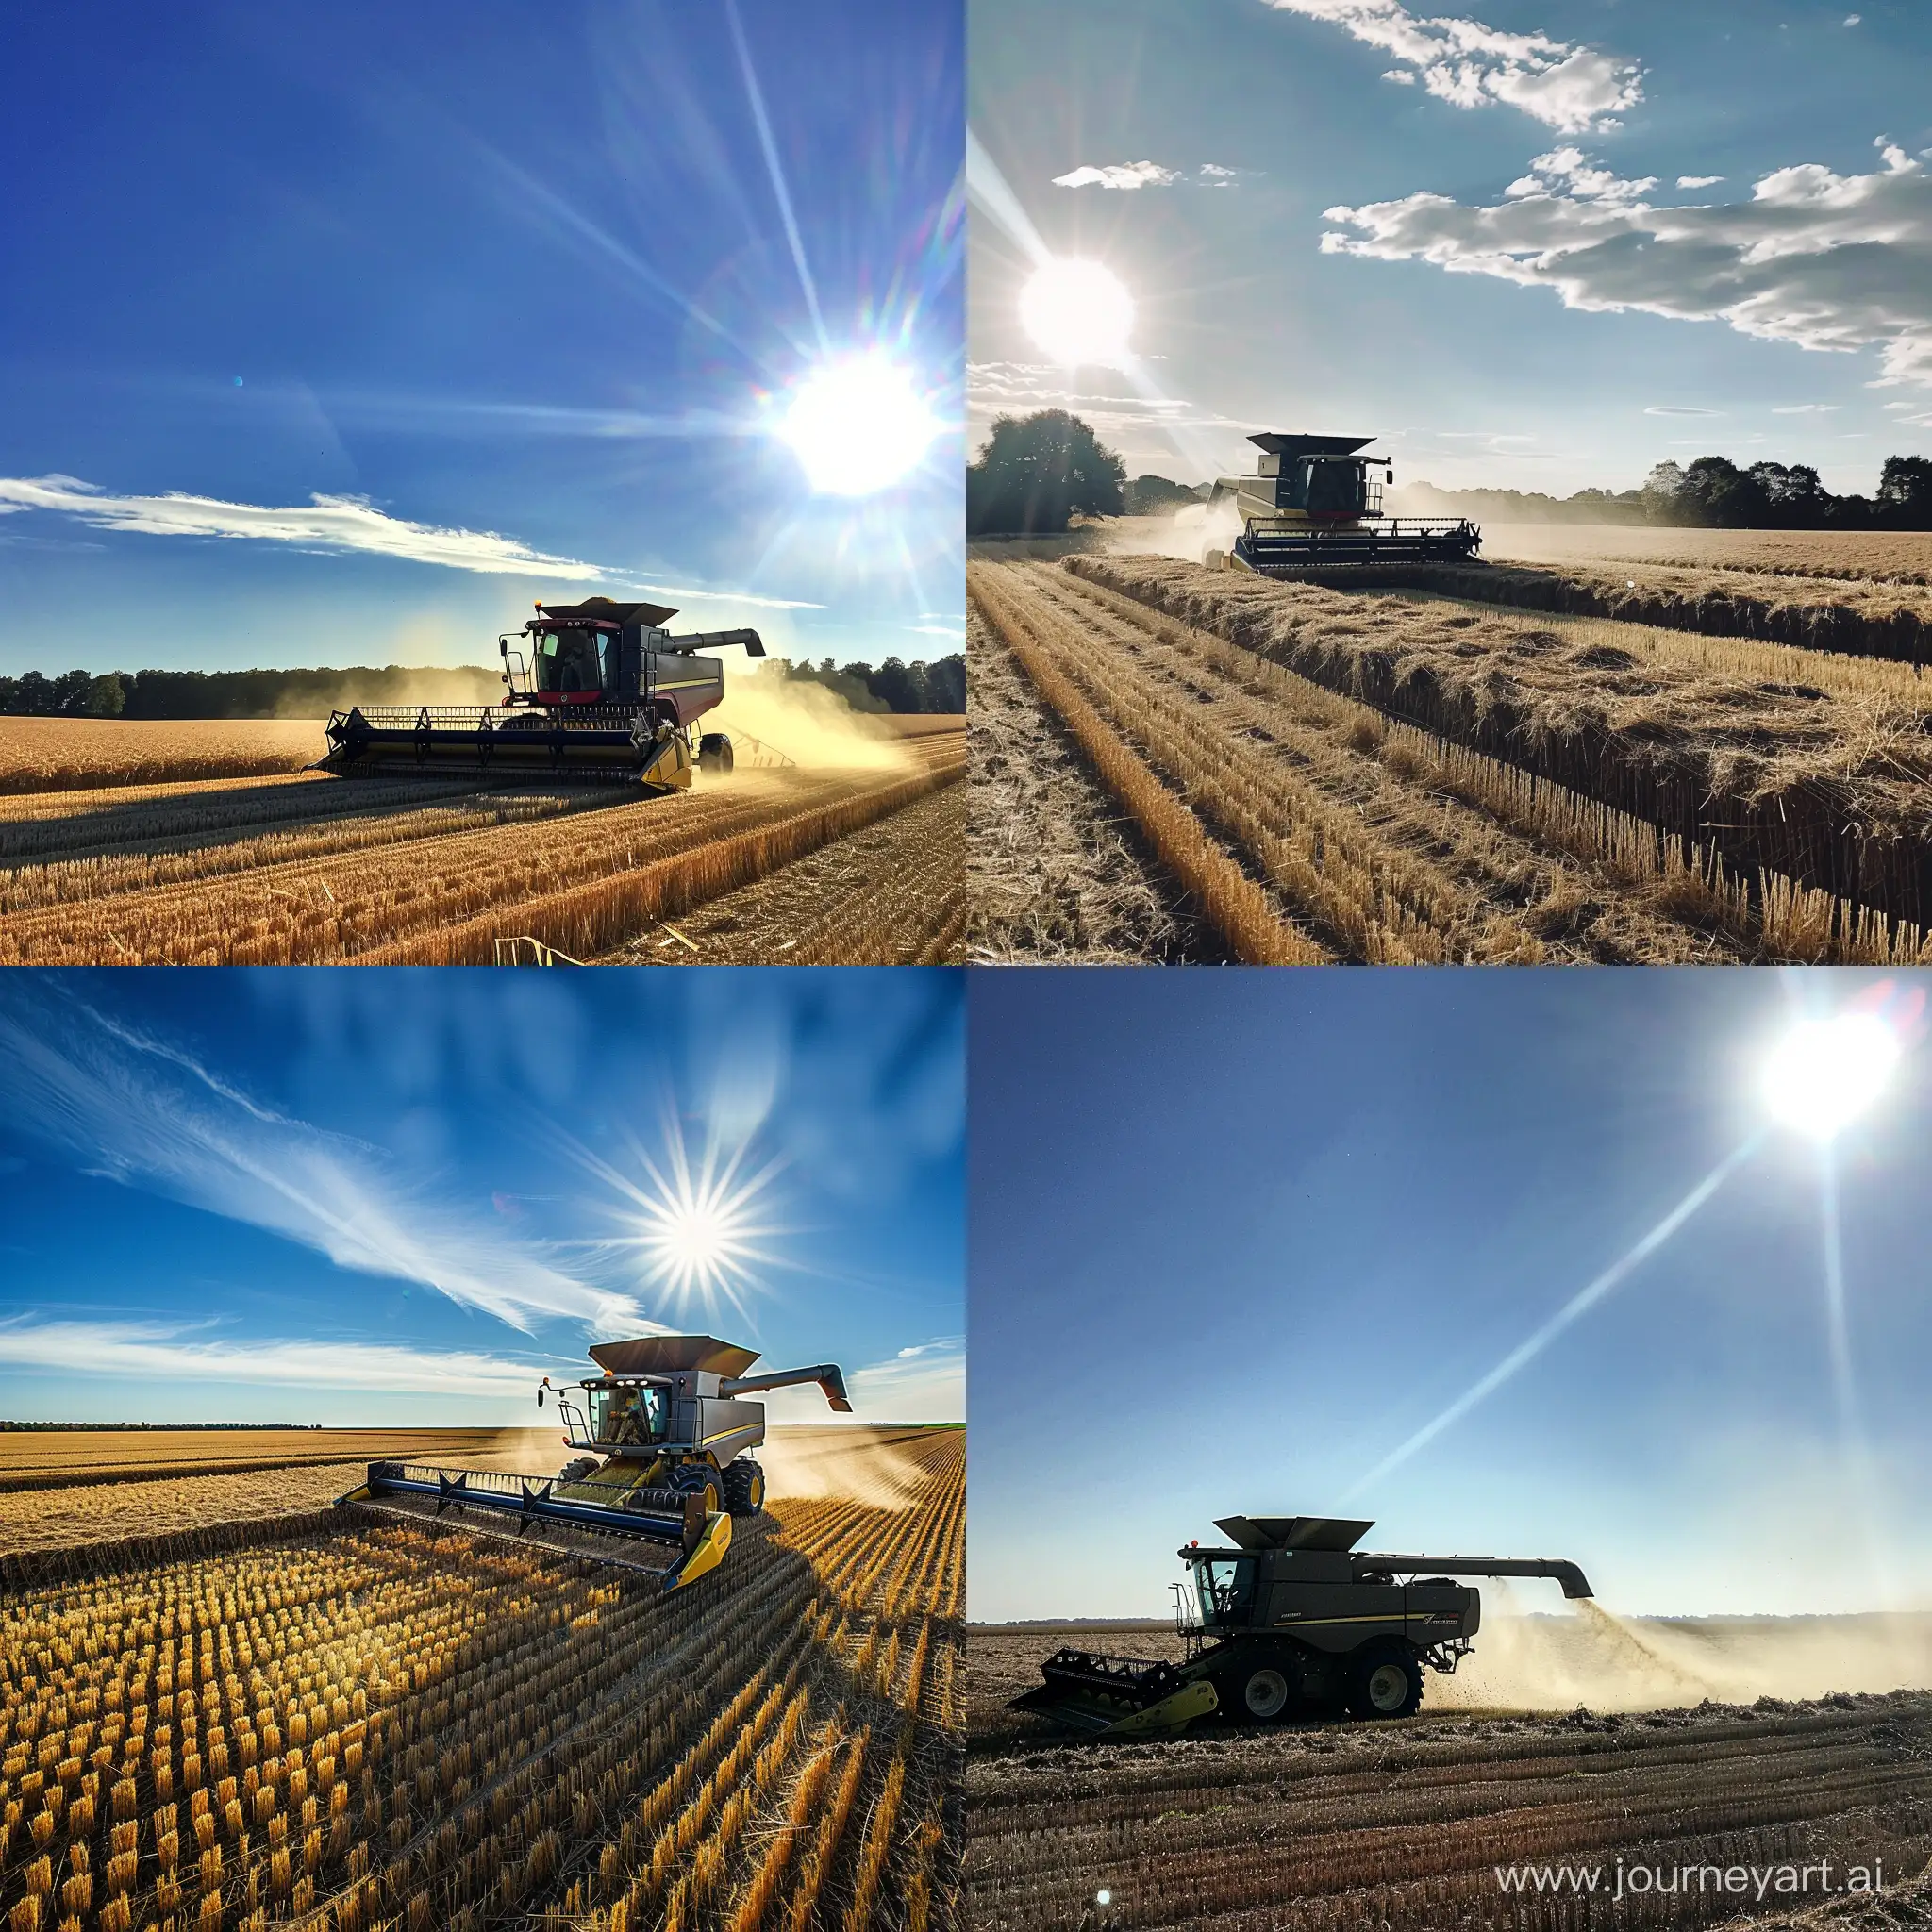 Harvesting-Wheat-in-a-Sunlit-Field-under-a-Blue-Sky